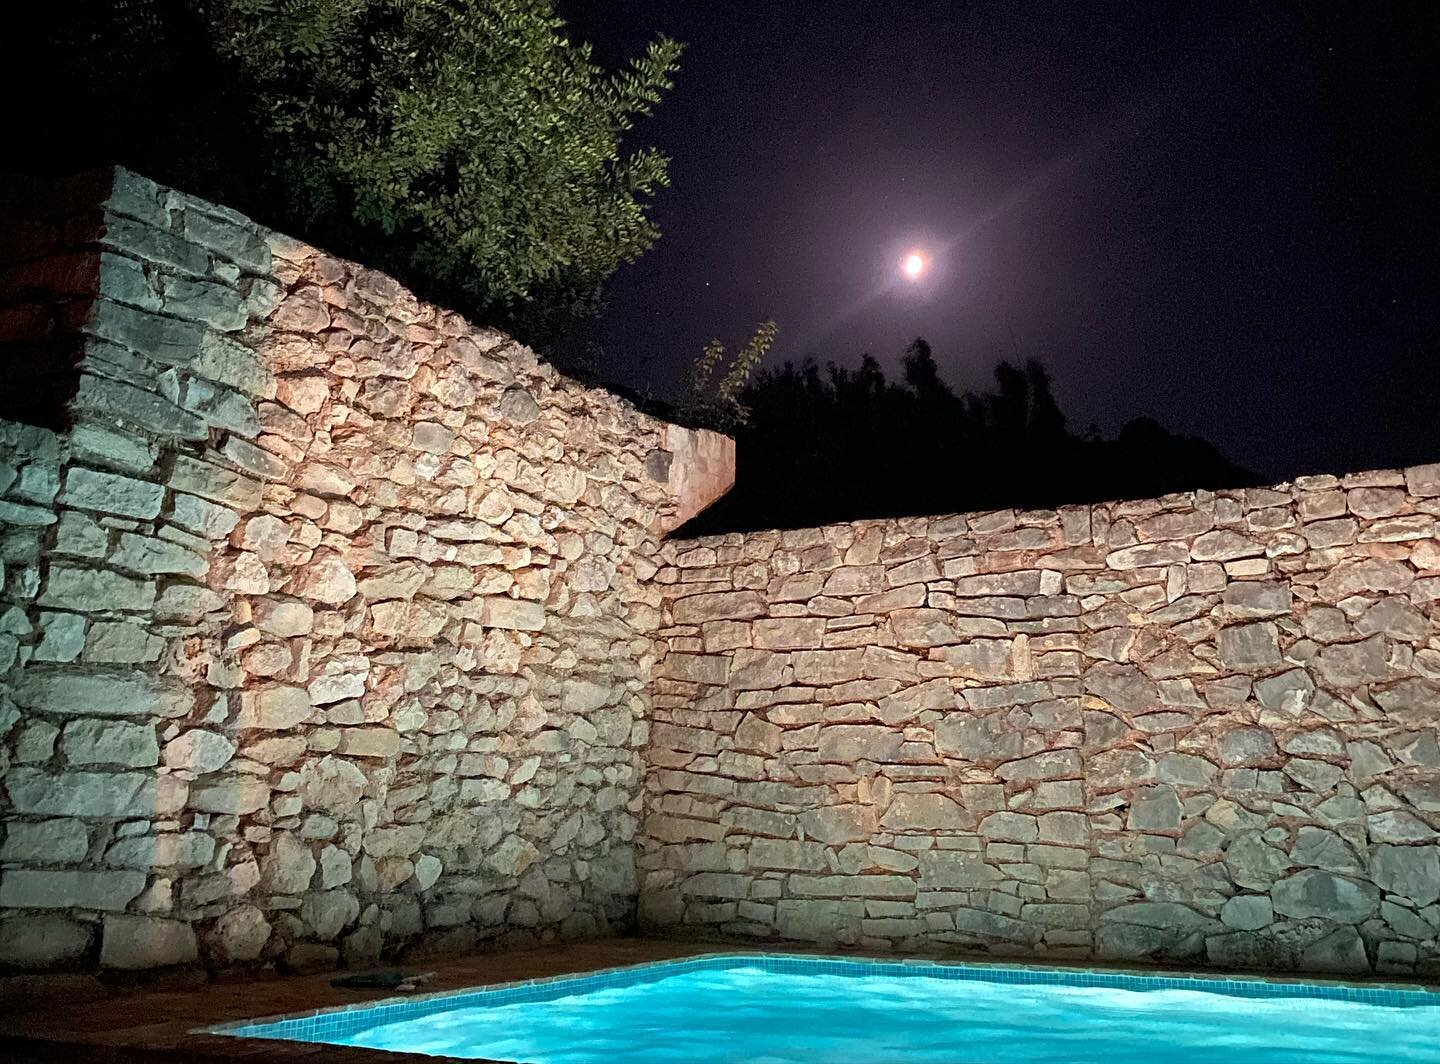 Feel-good night swim. ✨🌙🍷en @casanicole.rural 

#holidayrentals #mountainretreats
.
.
.
.
#LaCarroja #VallGallinera #Paradise #ExplorersLand #Seekers #AuthenticLiving #RealLiving #Village #MountainLovers #NatureLovers #AuthenticSpanish #JoyOfLiving